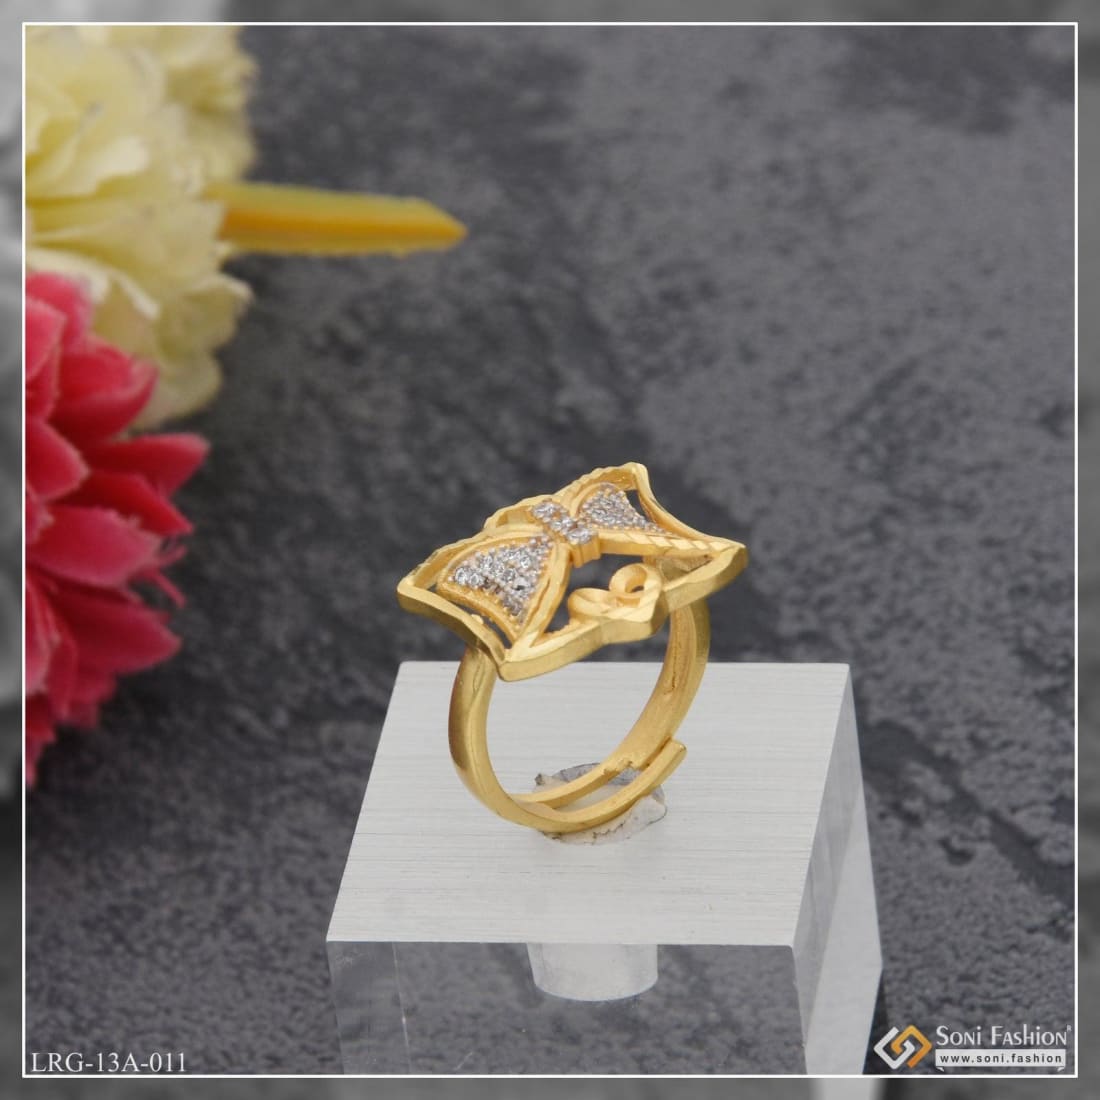 Buy Isabella Platinum Ring For Women Online | CaratLane